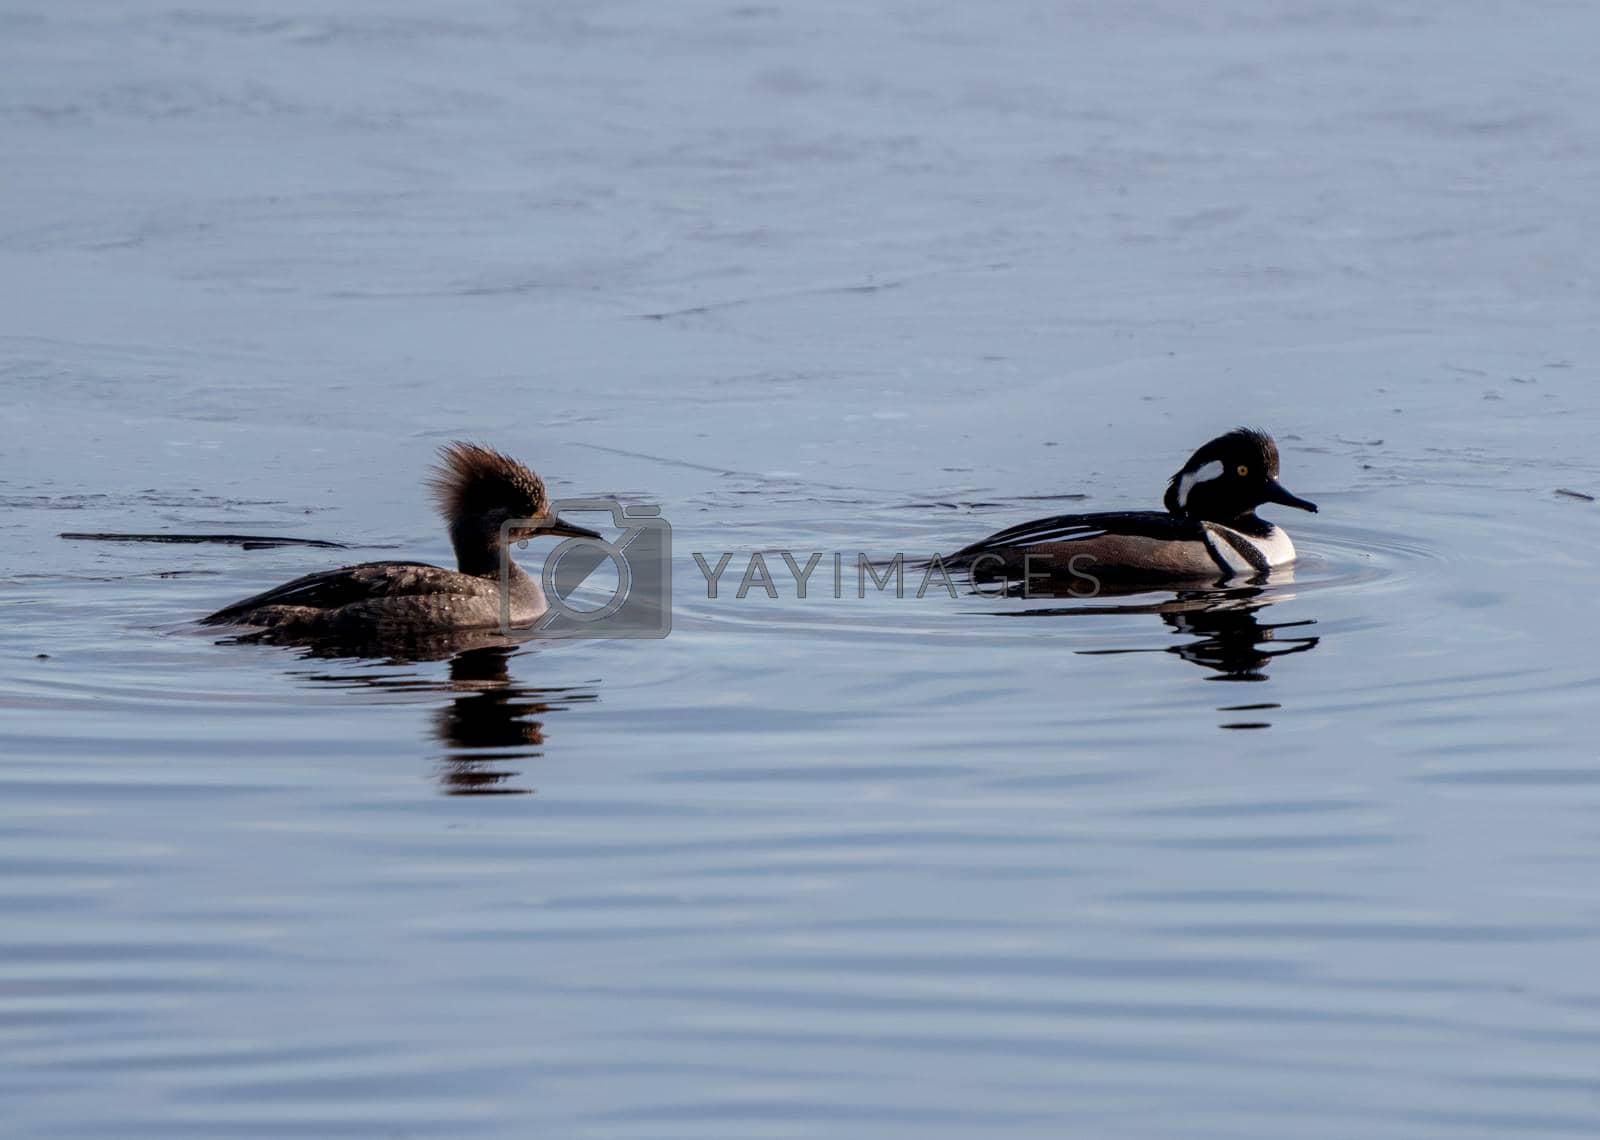 Royalty free image of Hooded Merganser Ducks by pictureguy